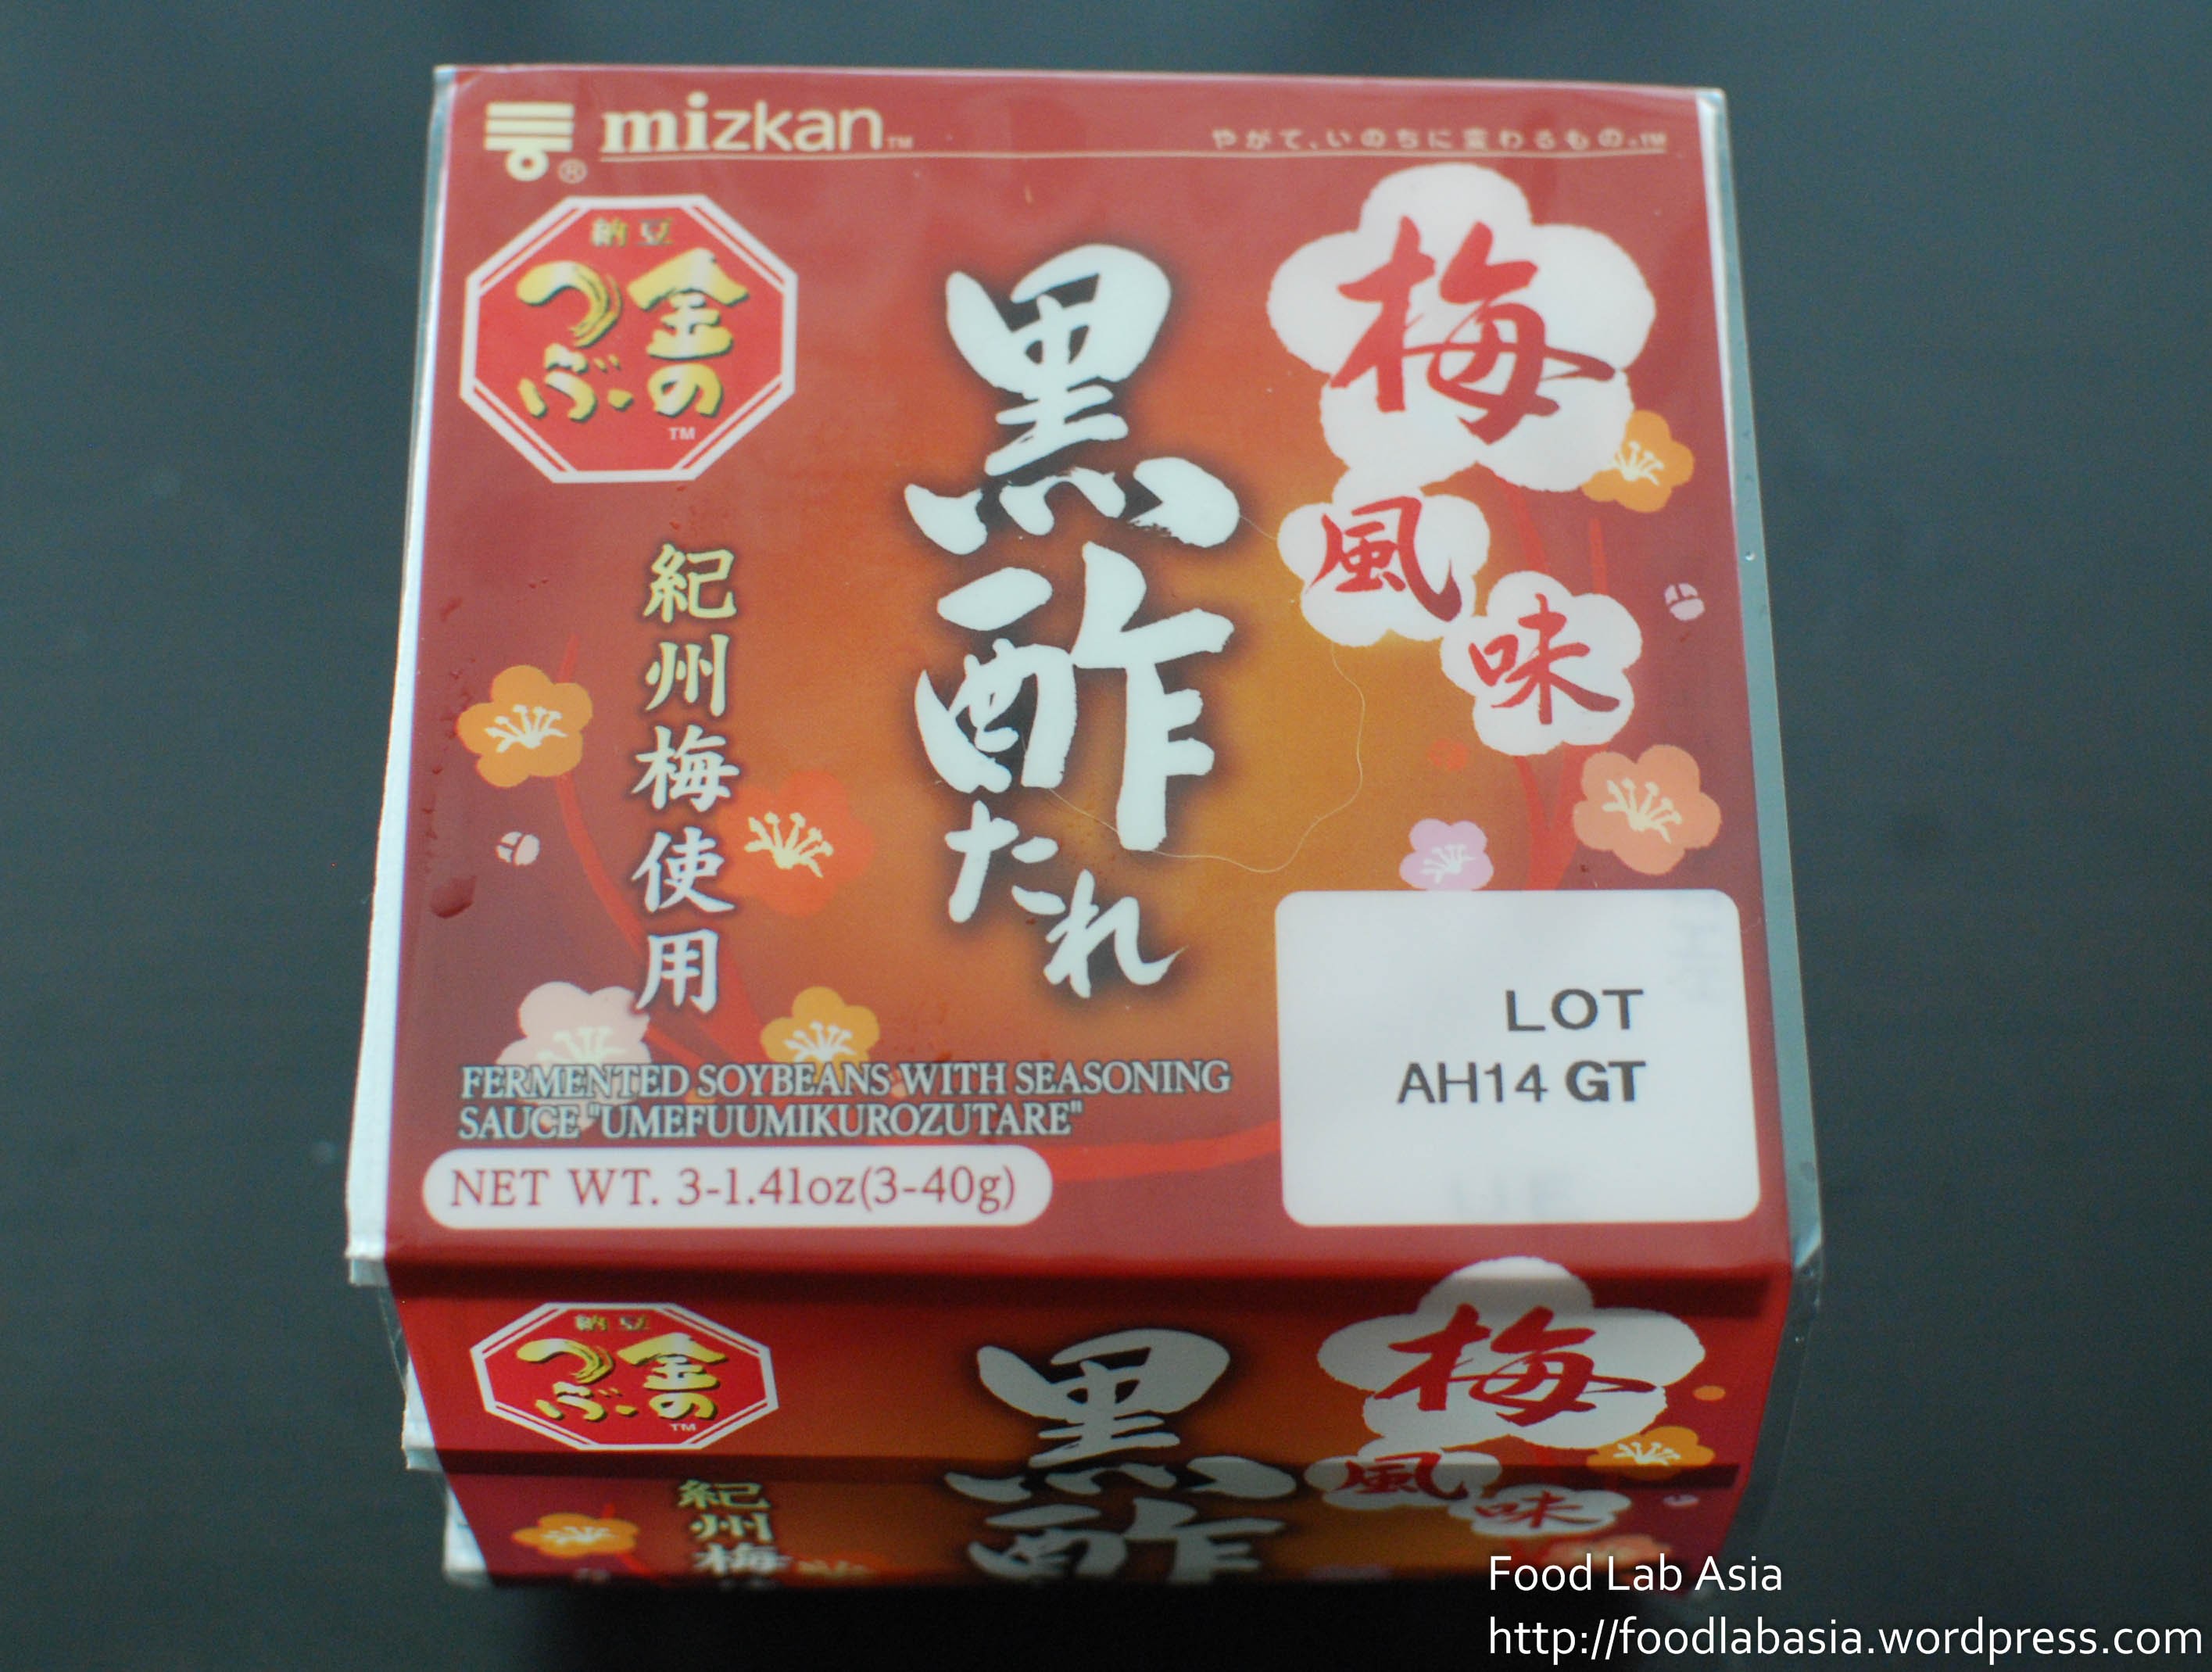 mizkan-fermented-soybeans-with-seasoning-sauce